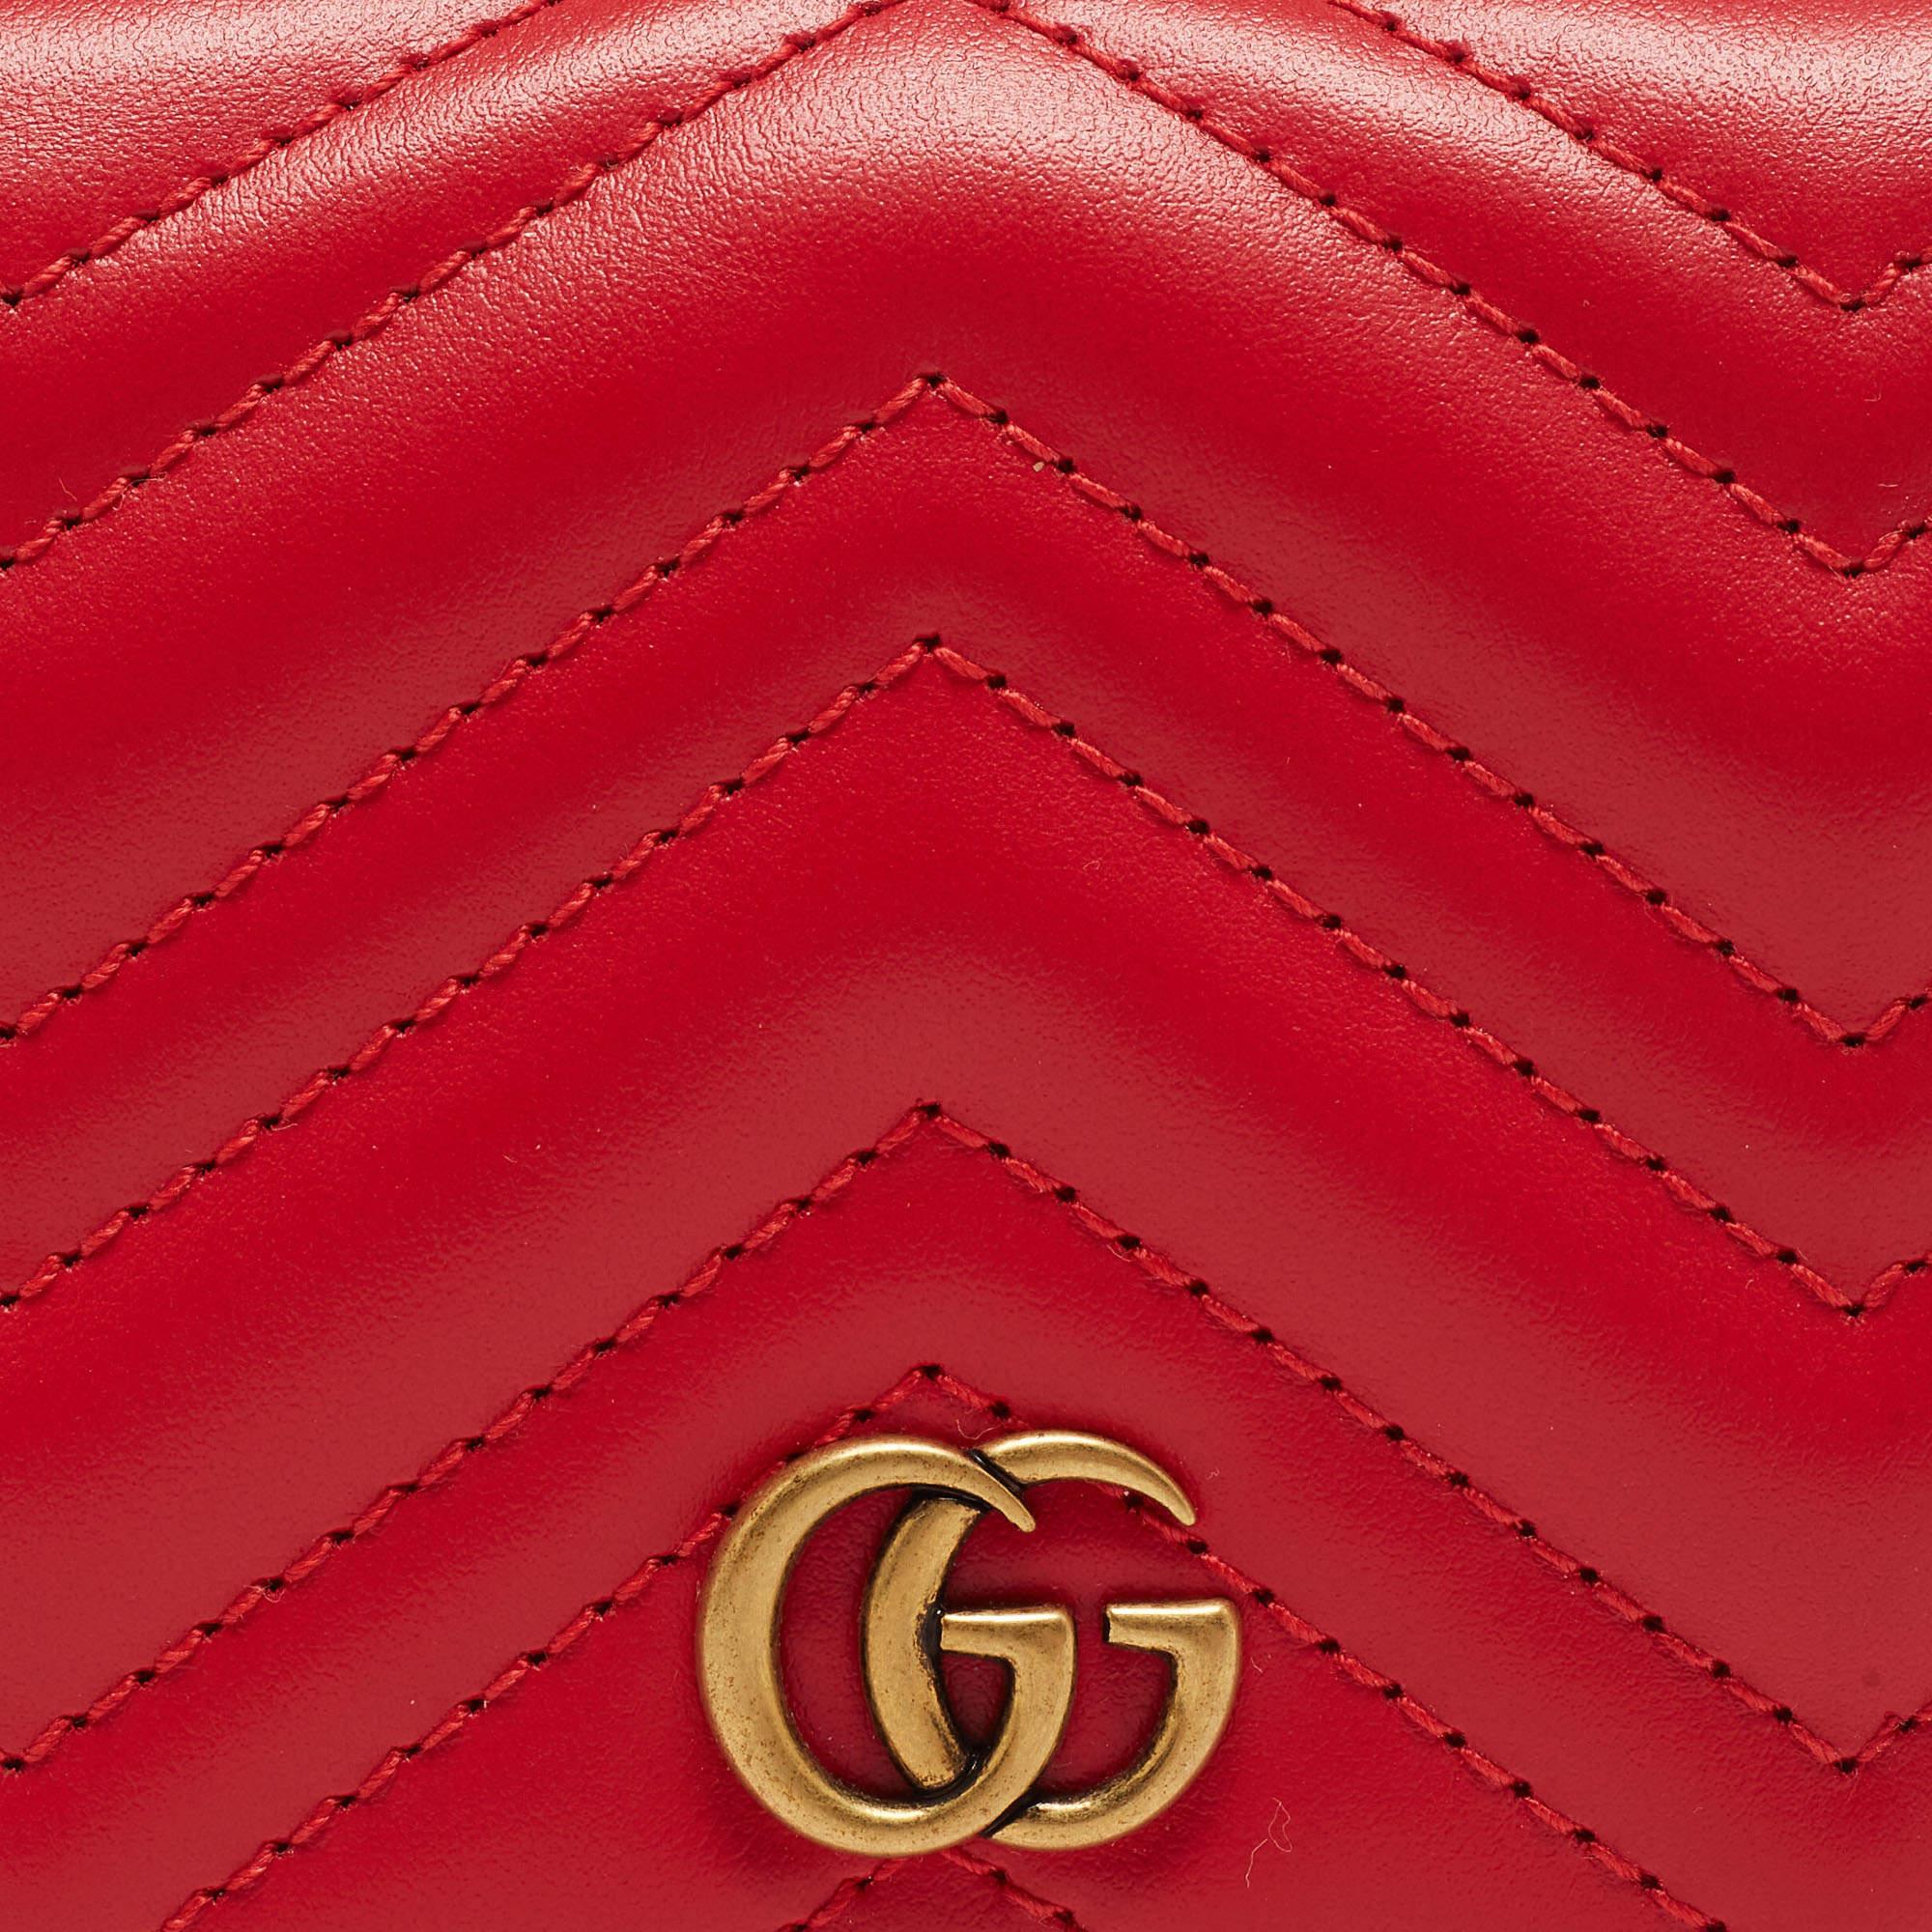 Gucci Red Matelassé Leather GG Marmont Flap Card Case 2